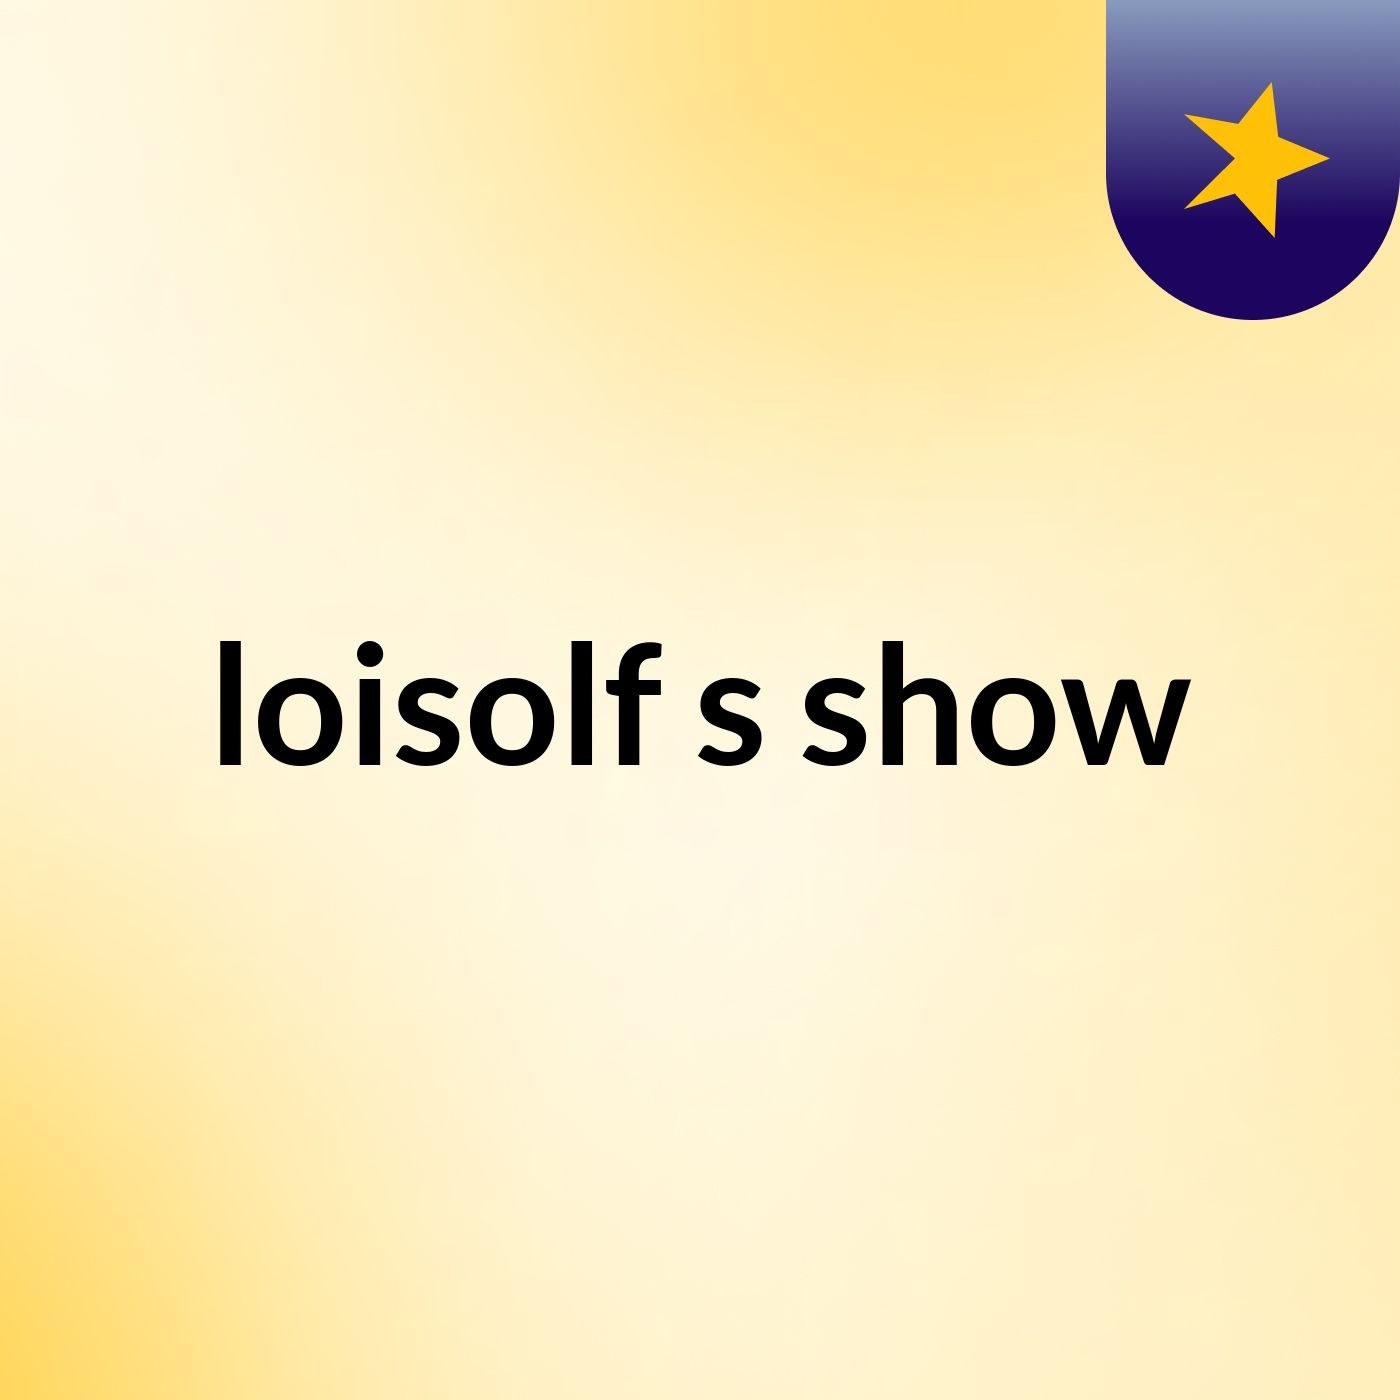 loisolf's show